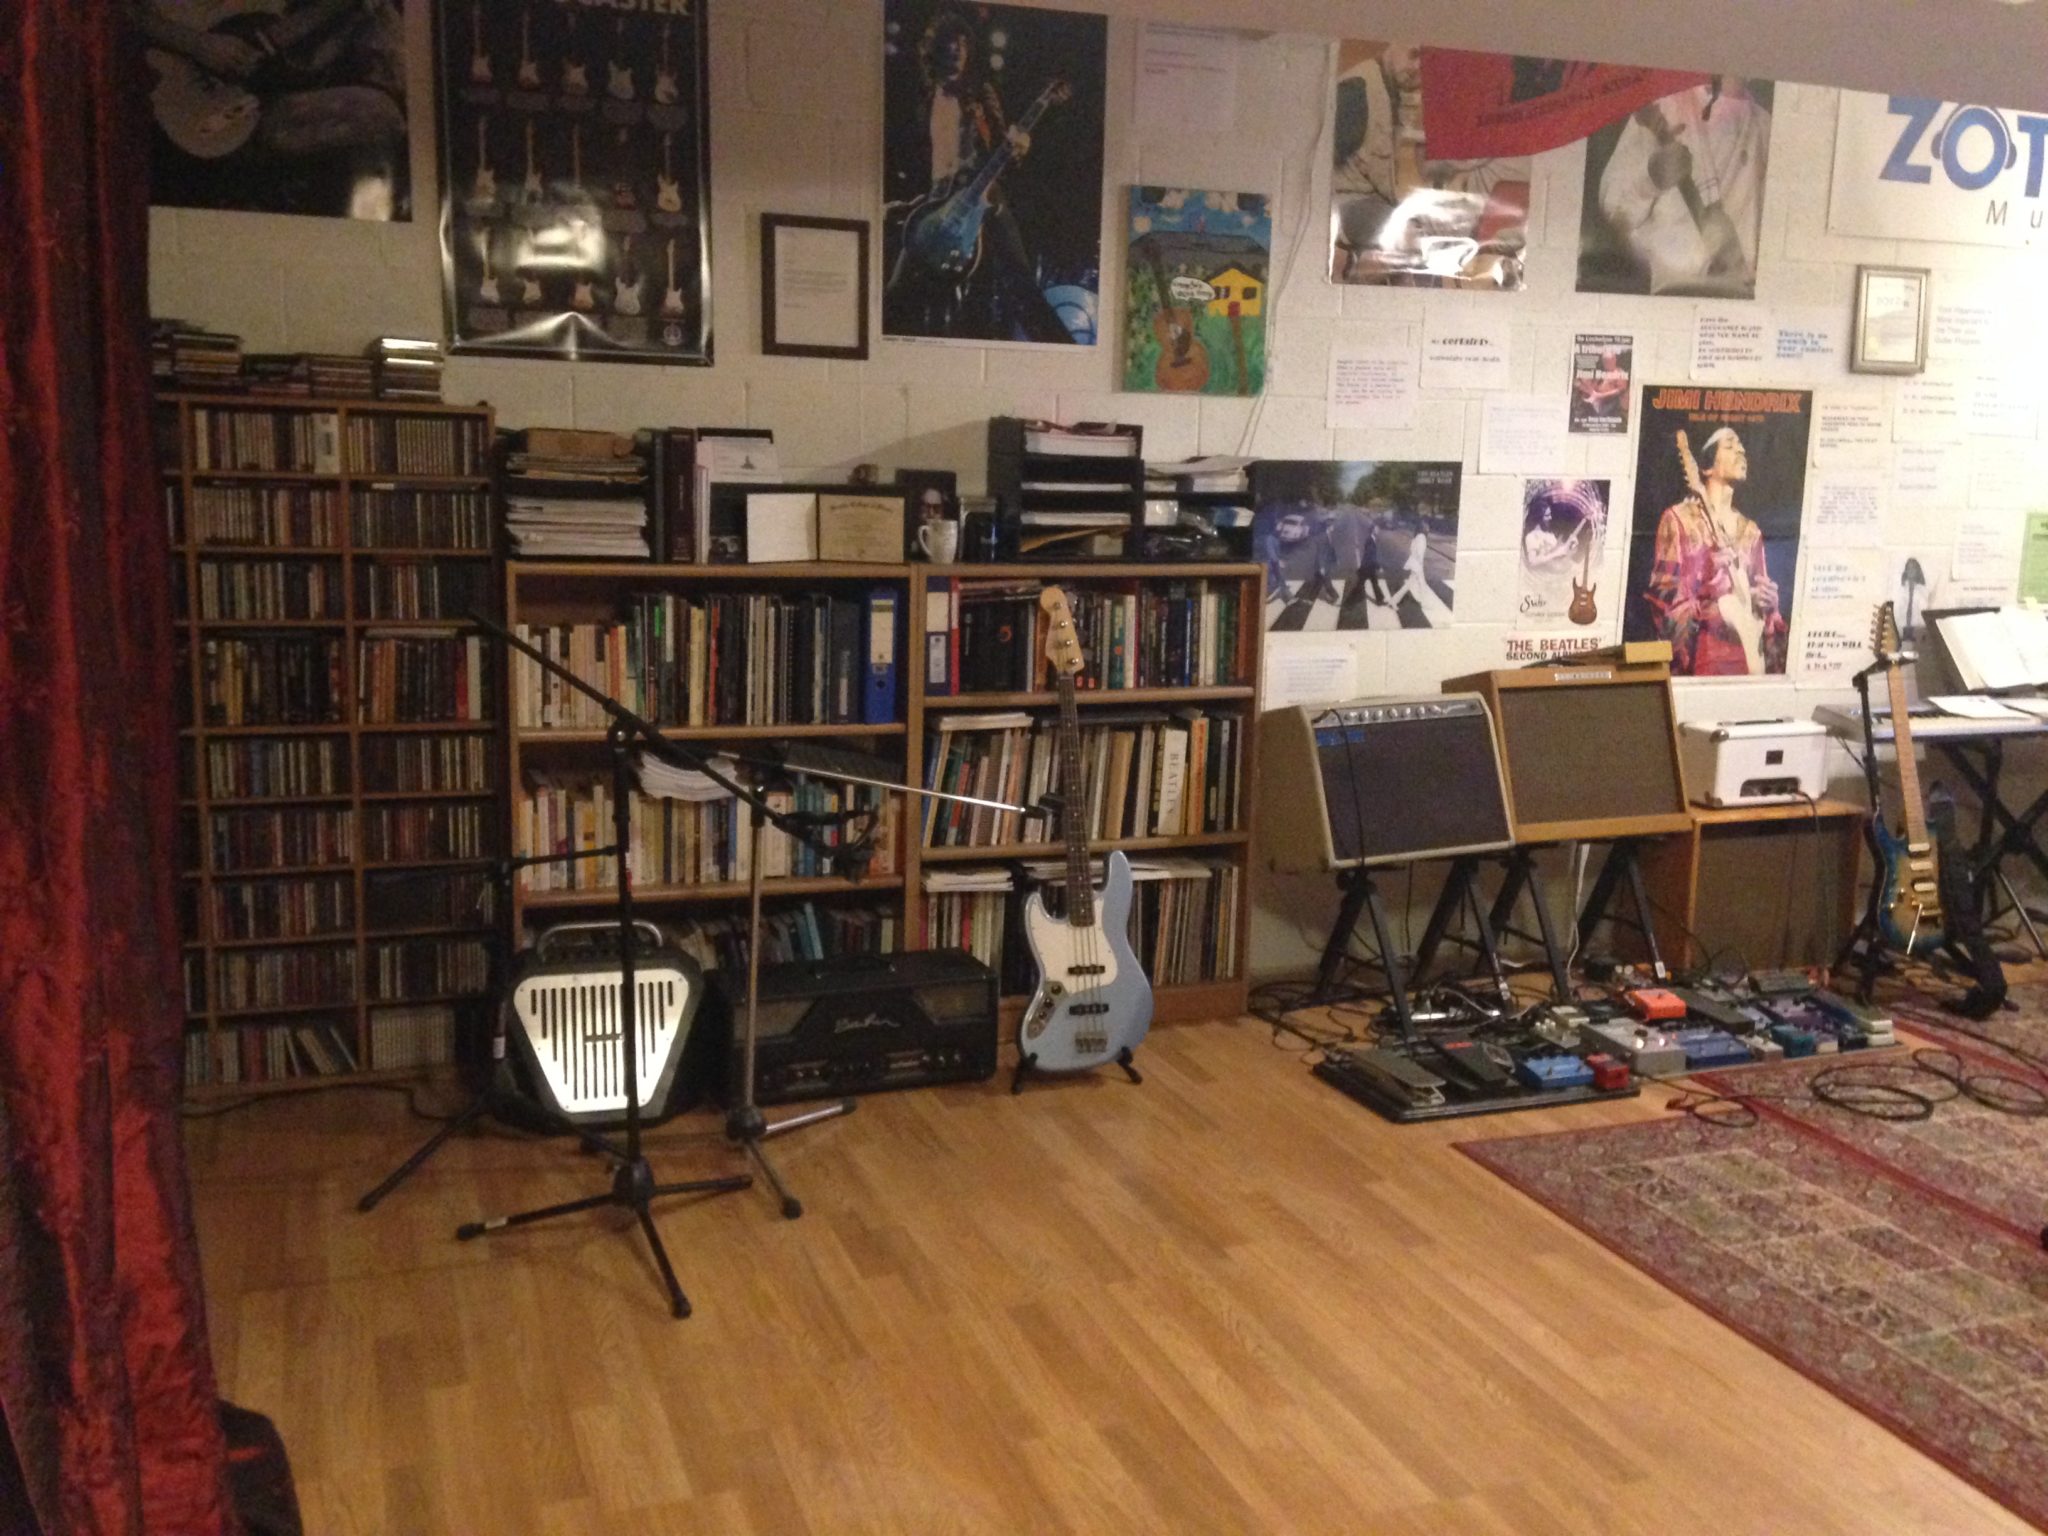 The ZOT Zin Music guitar lessons studio